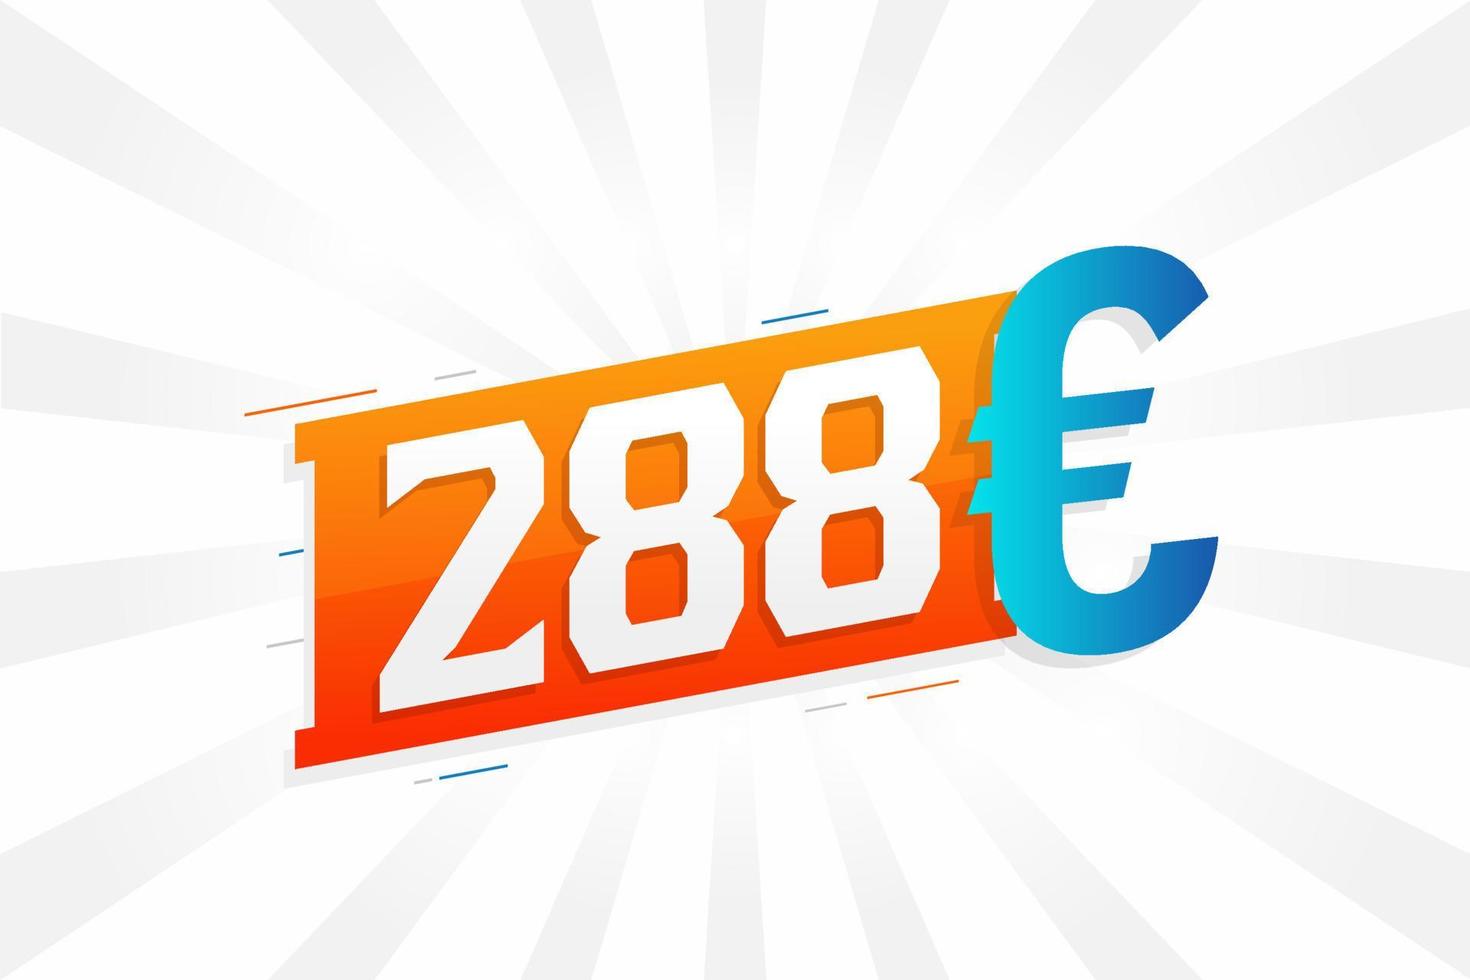 Símbolo de texto vectorial de moneda de 288 euros. 288 euro vector de stock de dinero de la unión europea